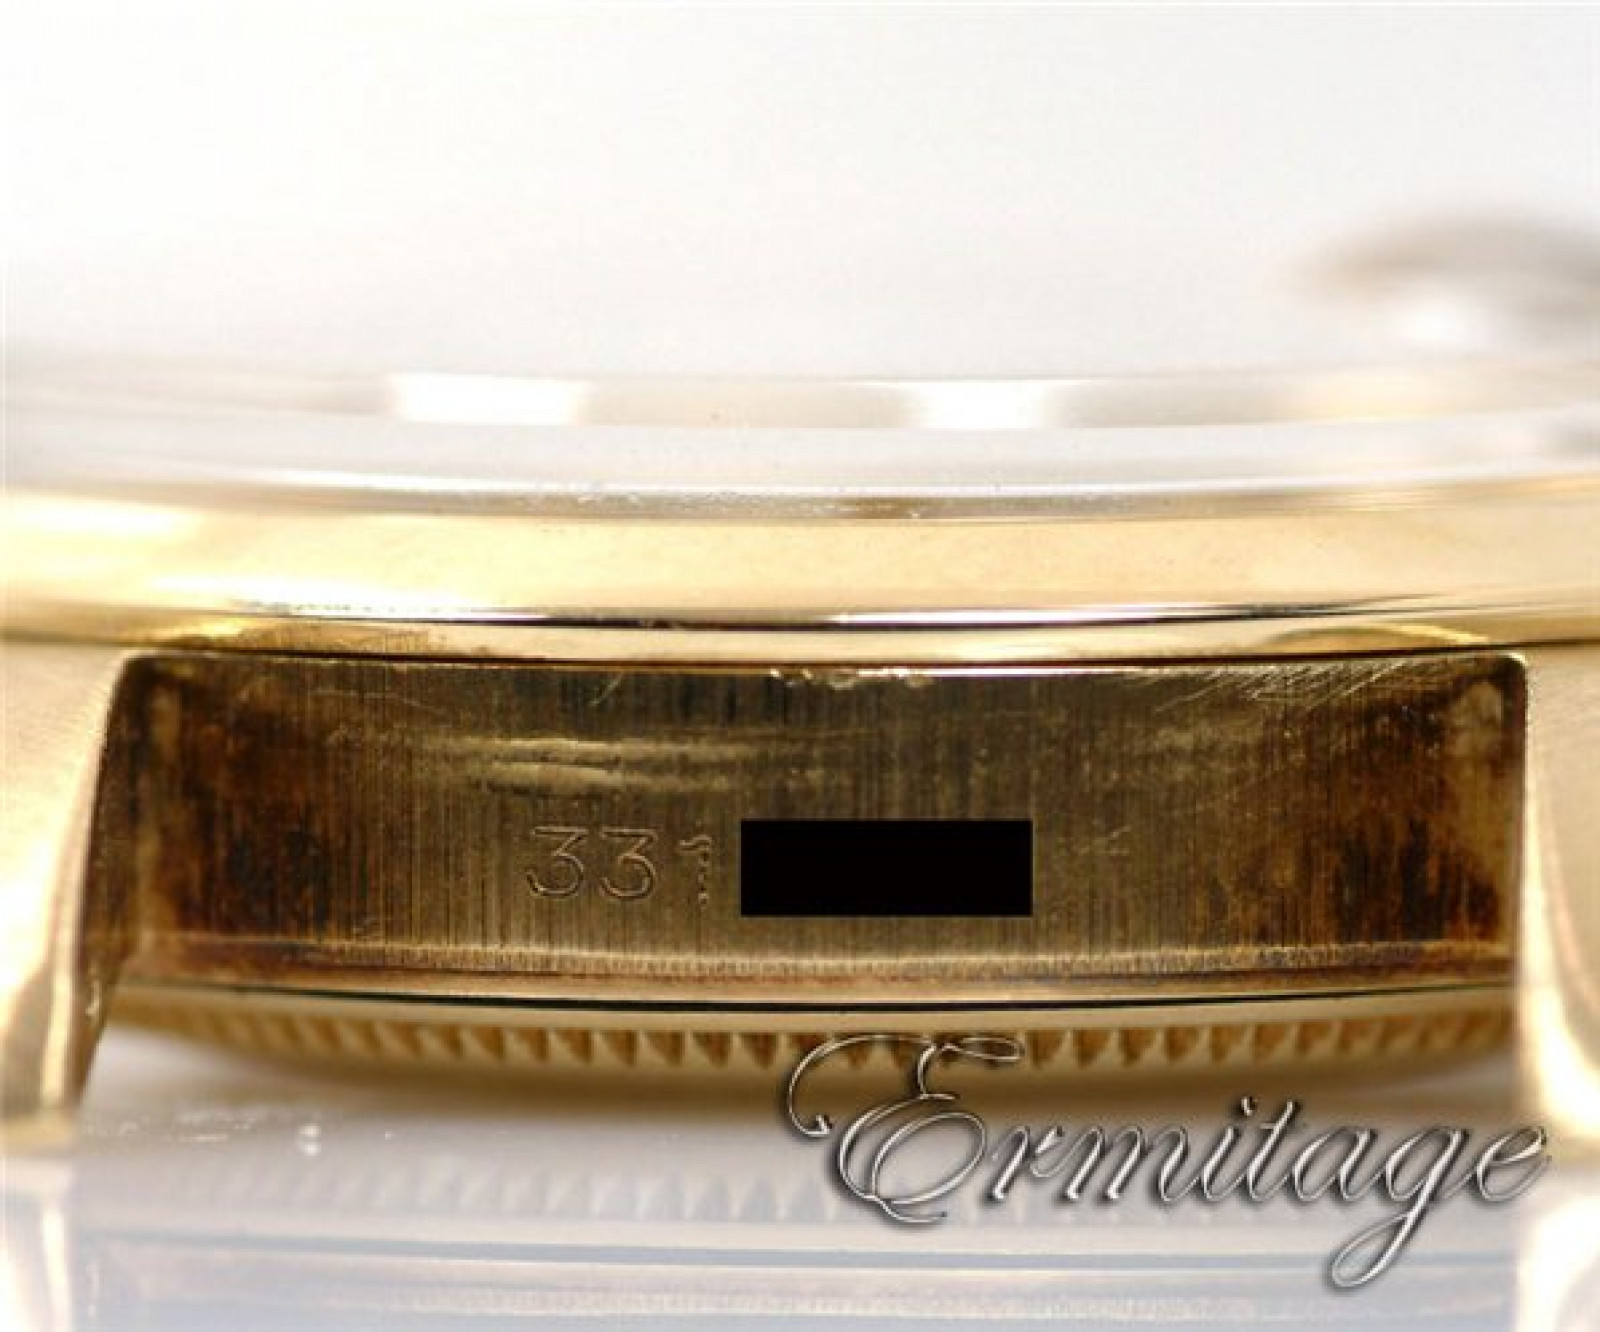 Vintage Rolex Date 1500 Gold